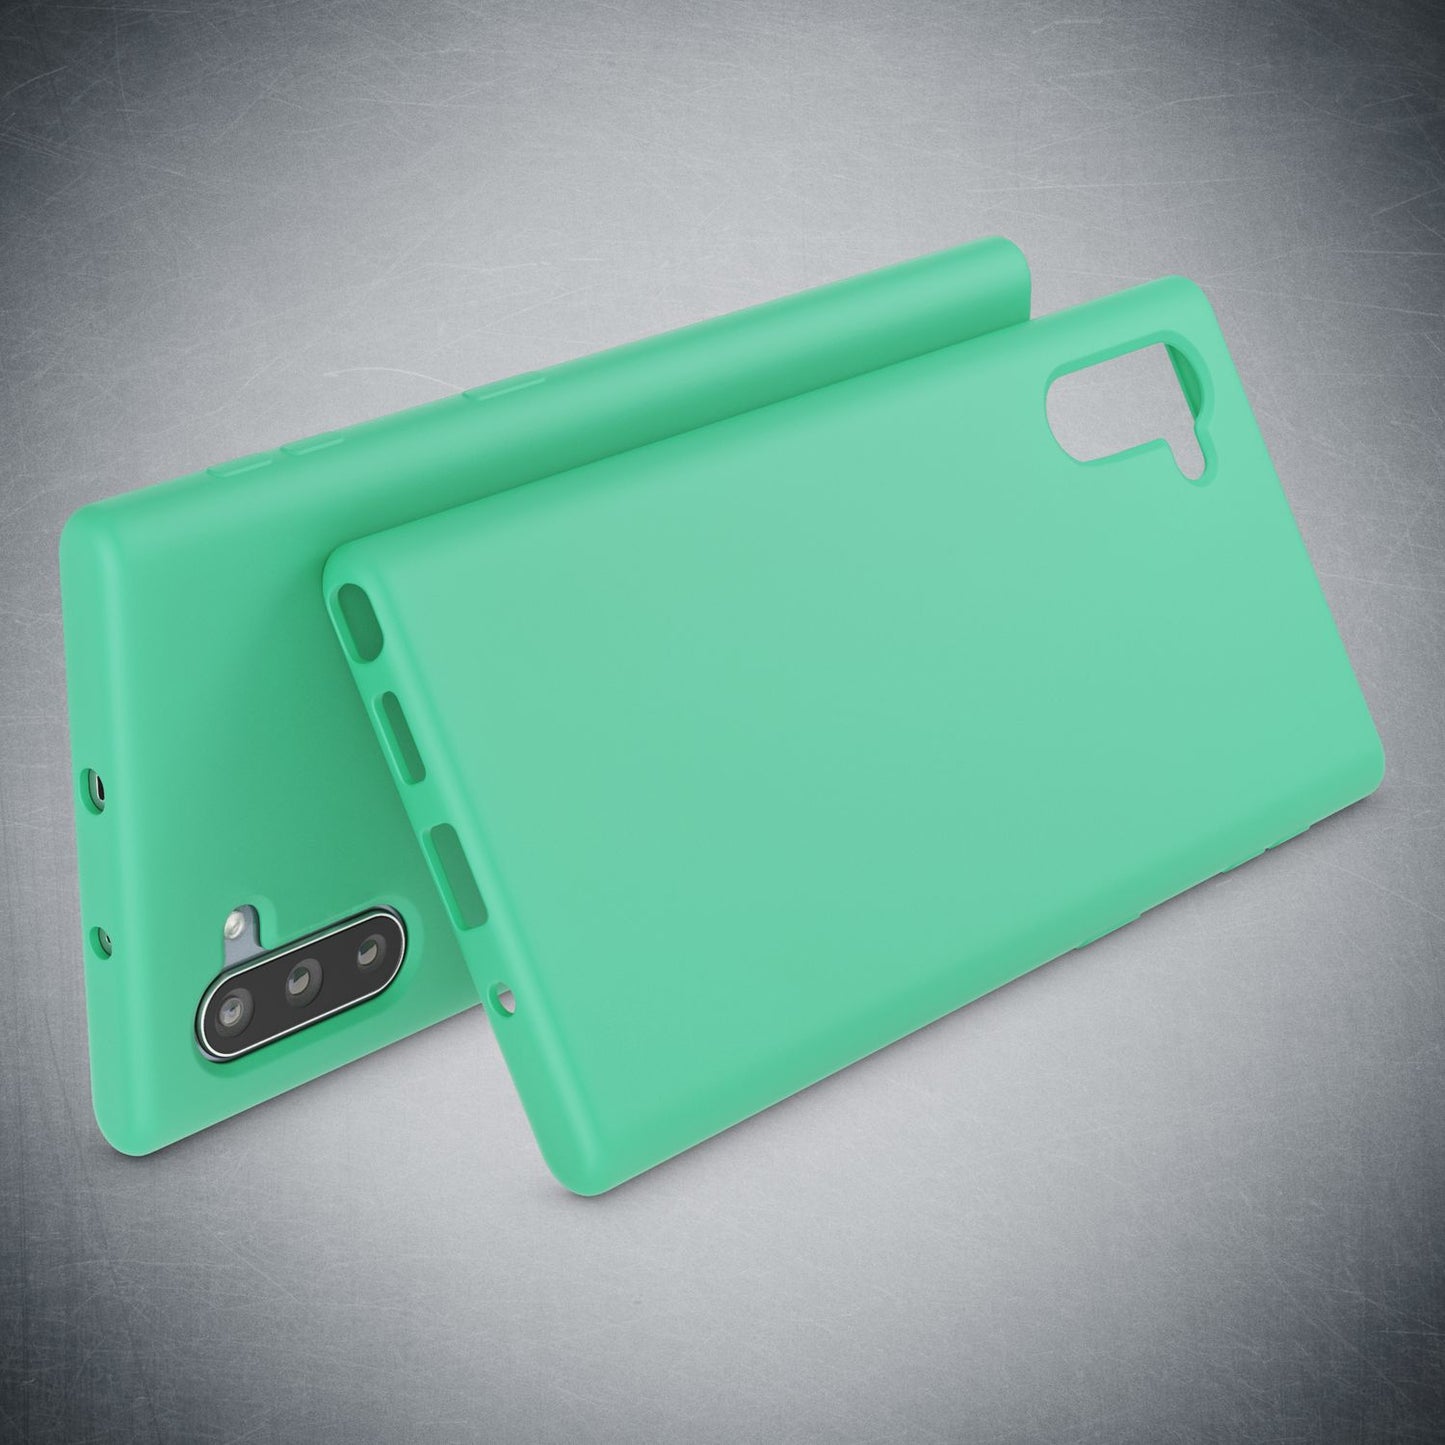 NALIA Neon Handy Hülle für Galaxy Note10, Soft case & Silikon Bumper Cover